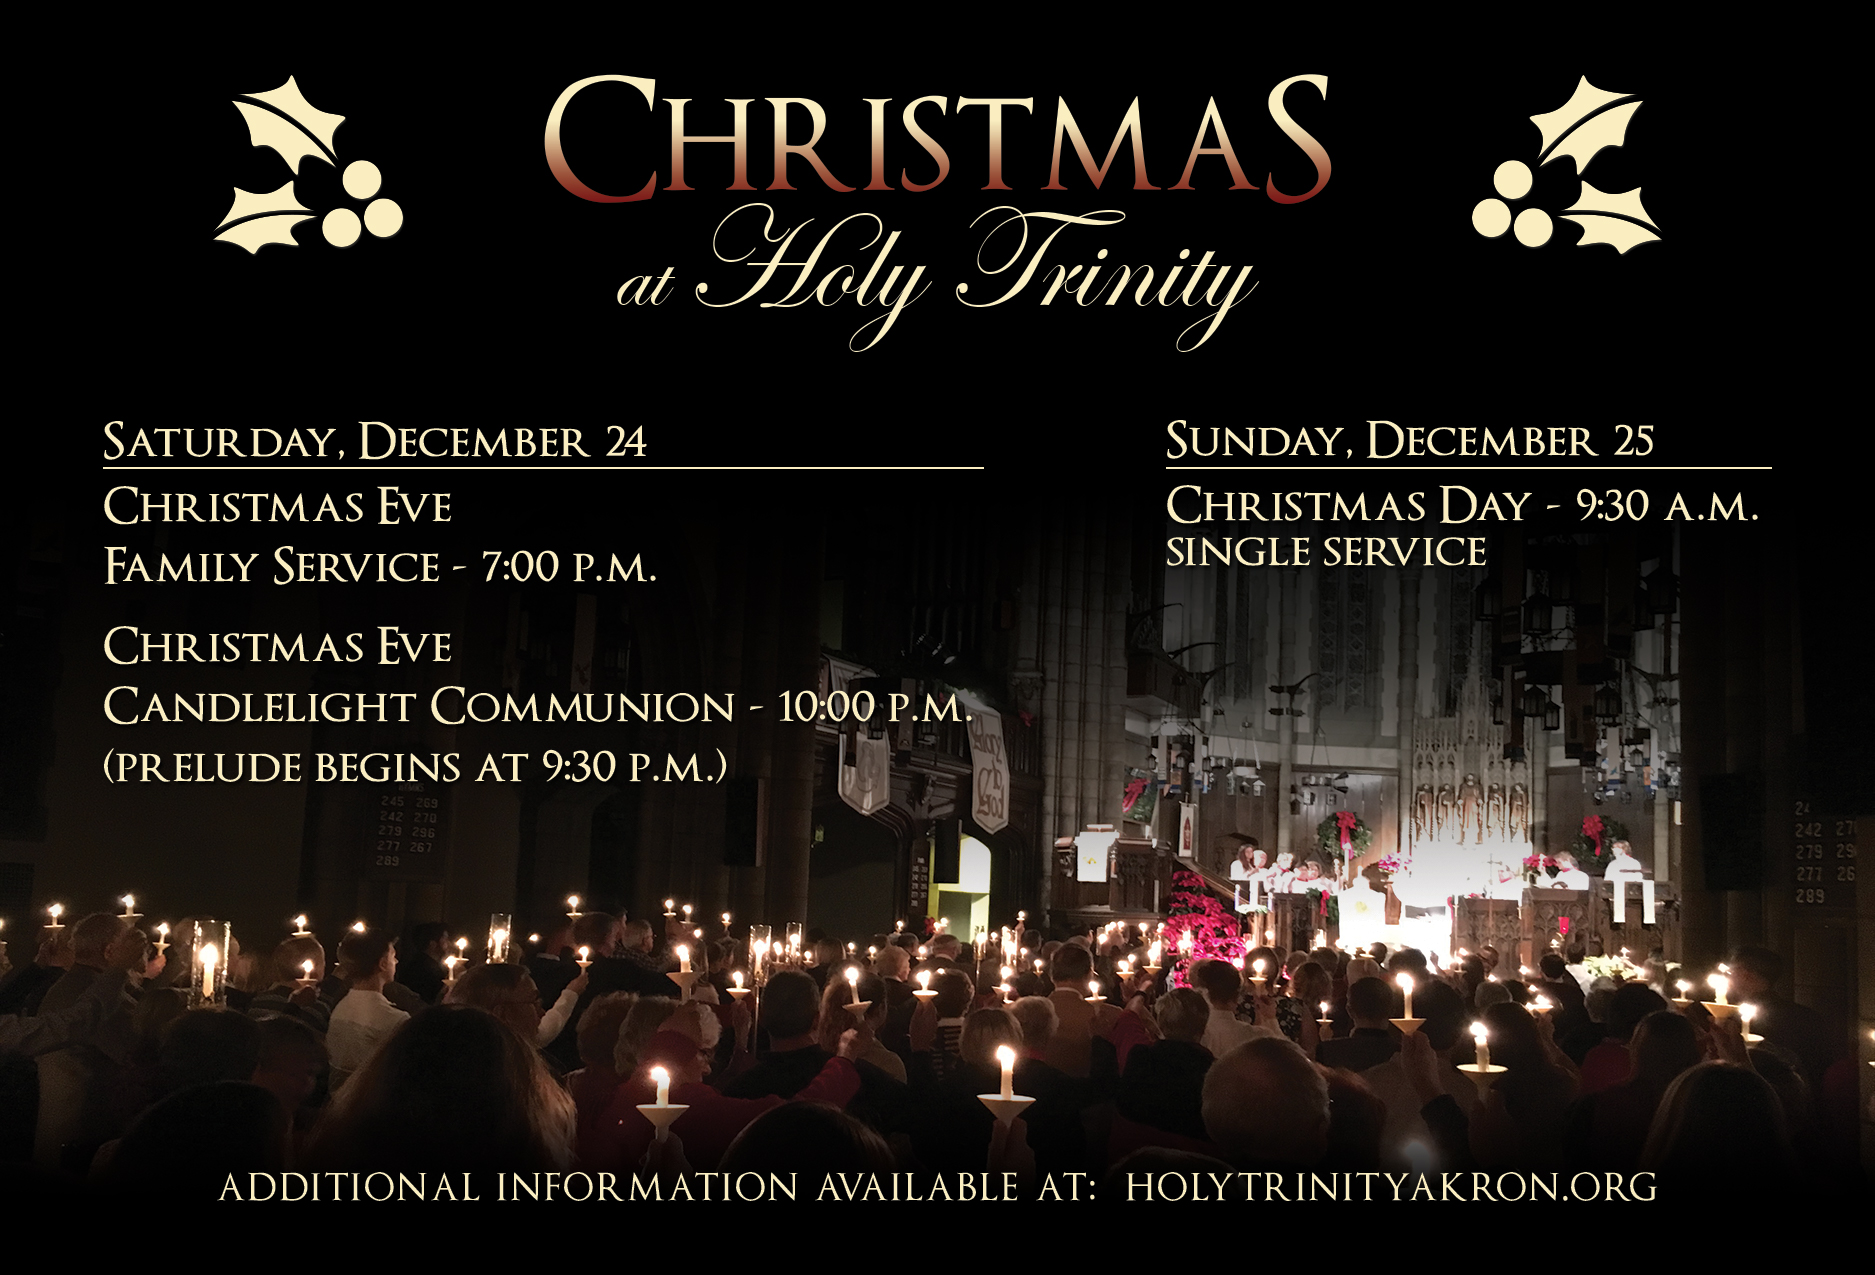 Christmas Services at Holy Trinity, Holy Trinity Lutheran Church at